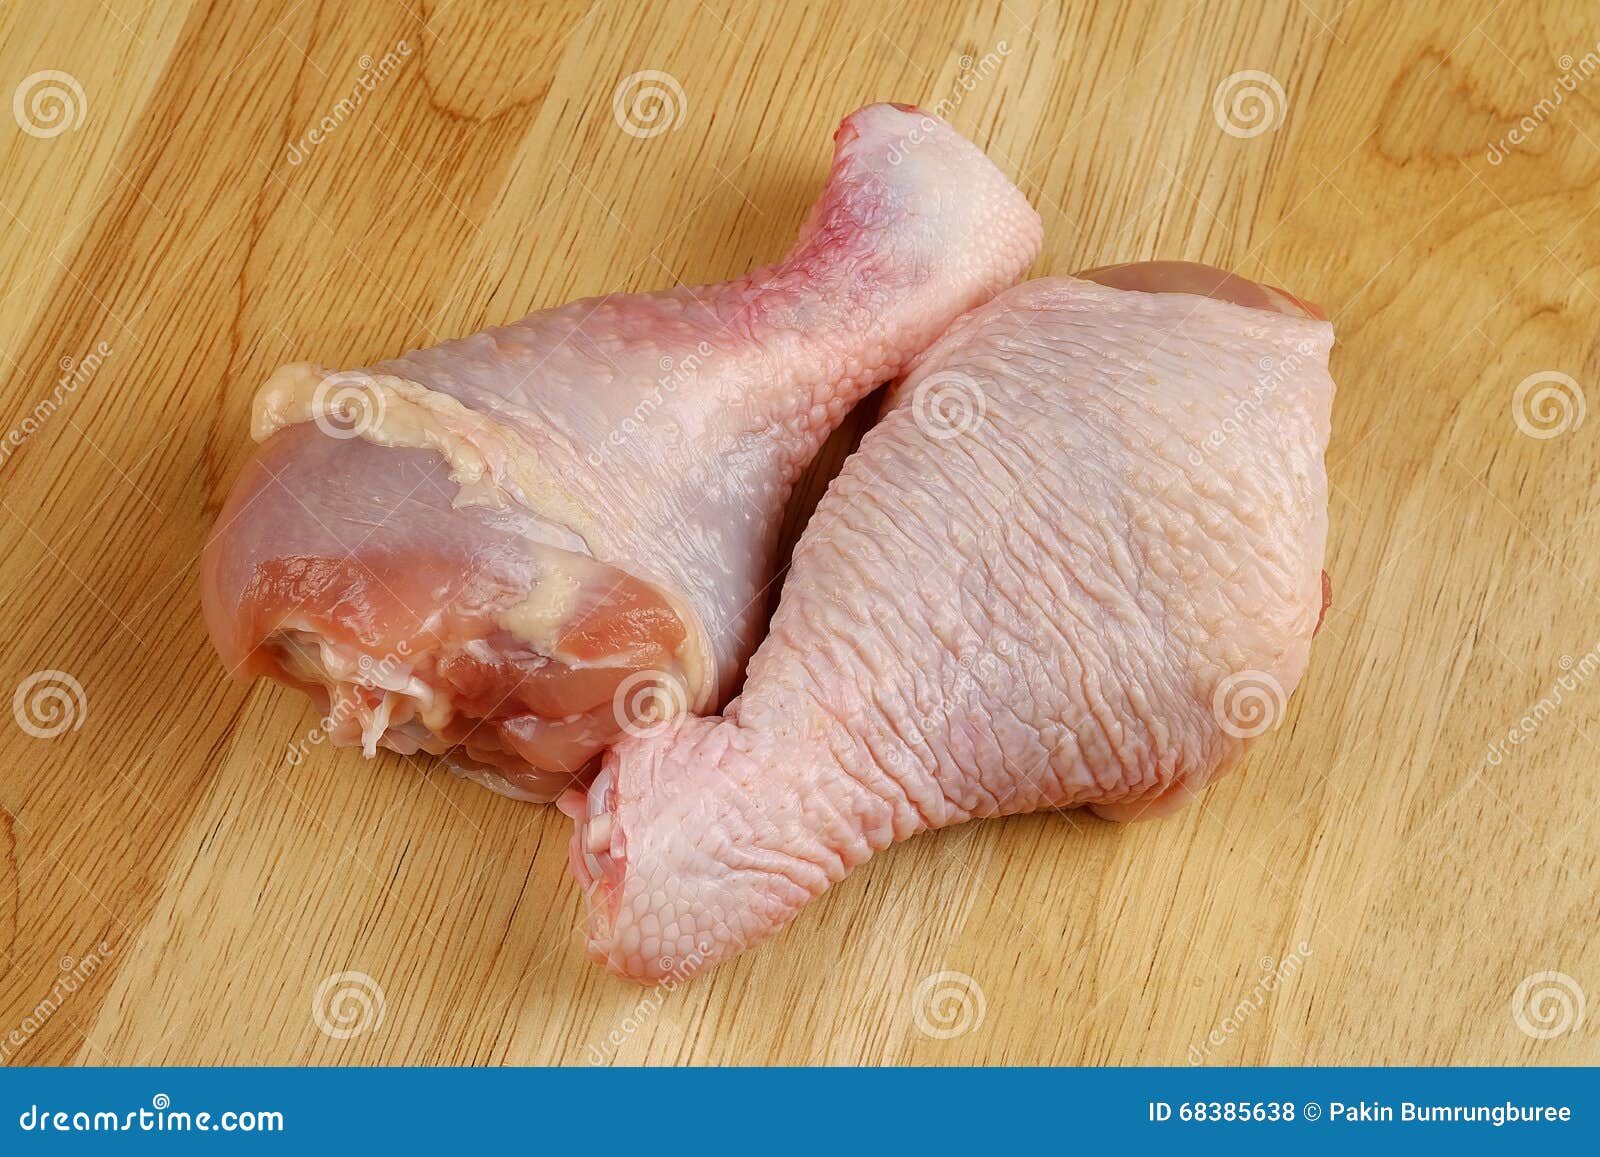 https://thumbs.dreamstime.com/z/fresh-chicken-legs-cutting-board-close-up-drumstick-68385638.jpg